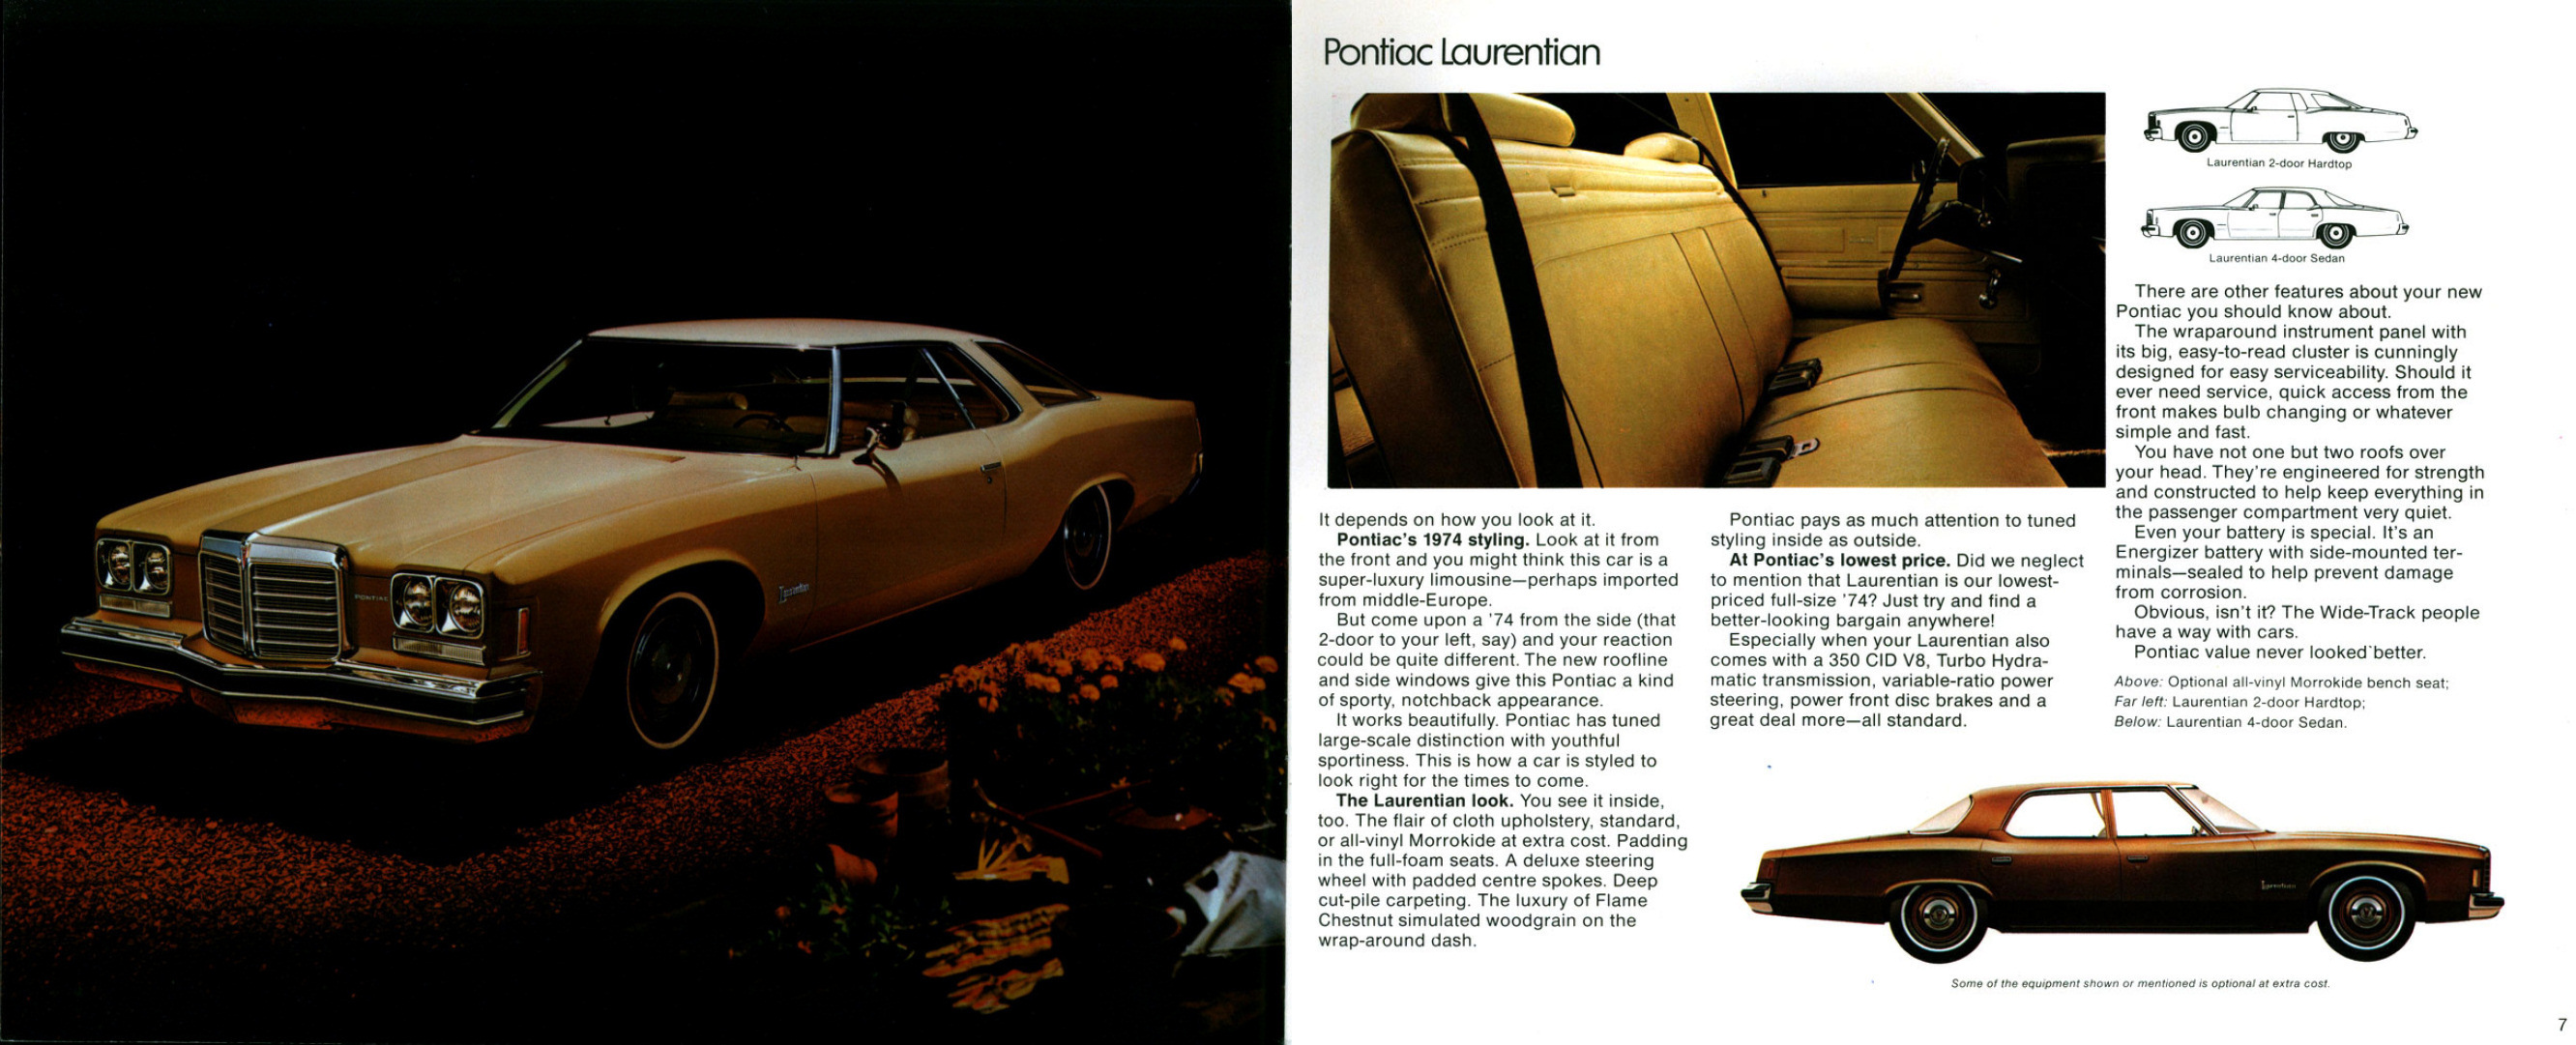 1974_Pontiac_Full_Size_Cdn-06-07